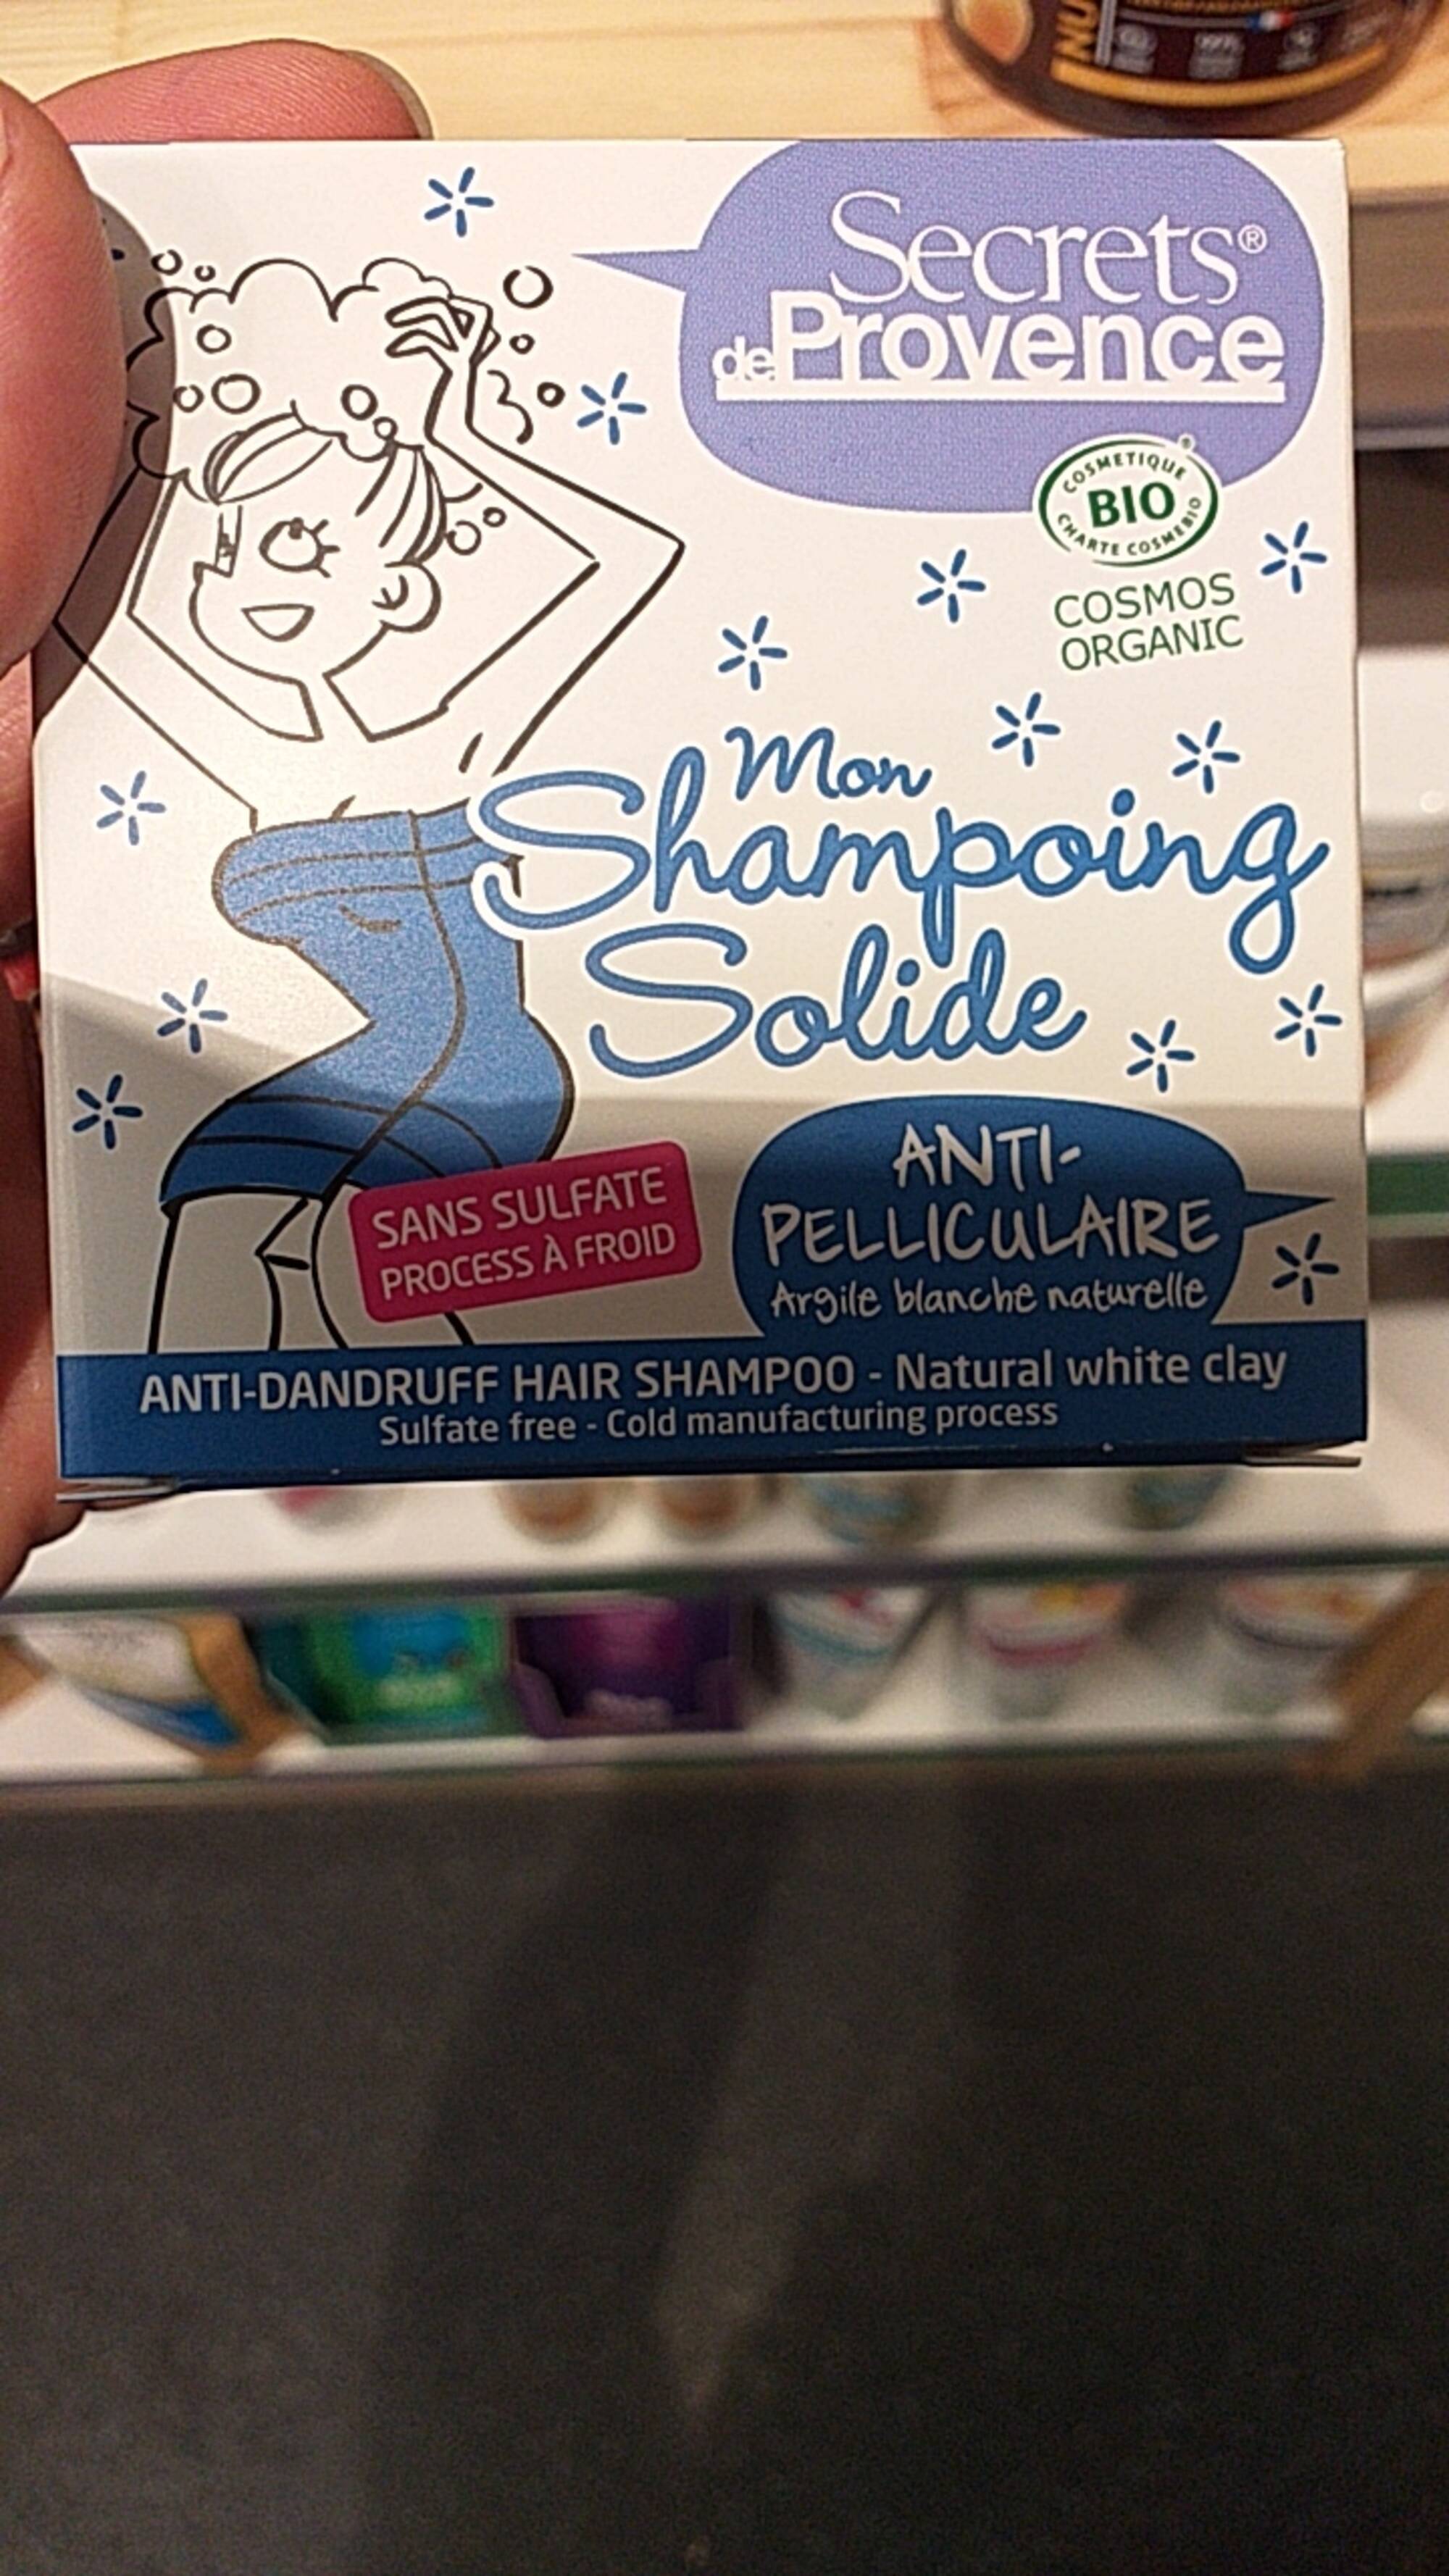 SECRETS DE PROVENCE - Mon shampooing solide anti-pelliculaire